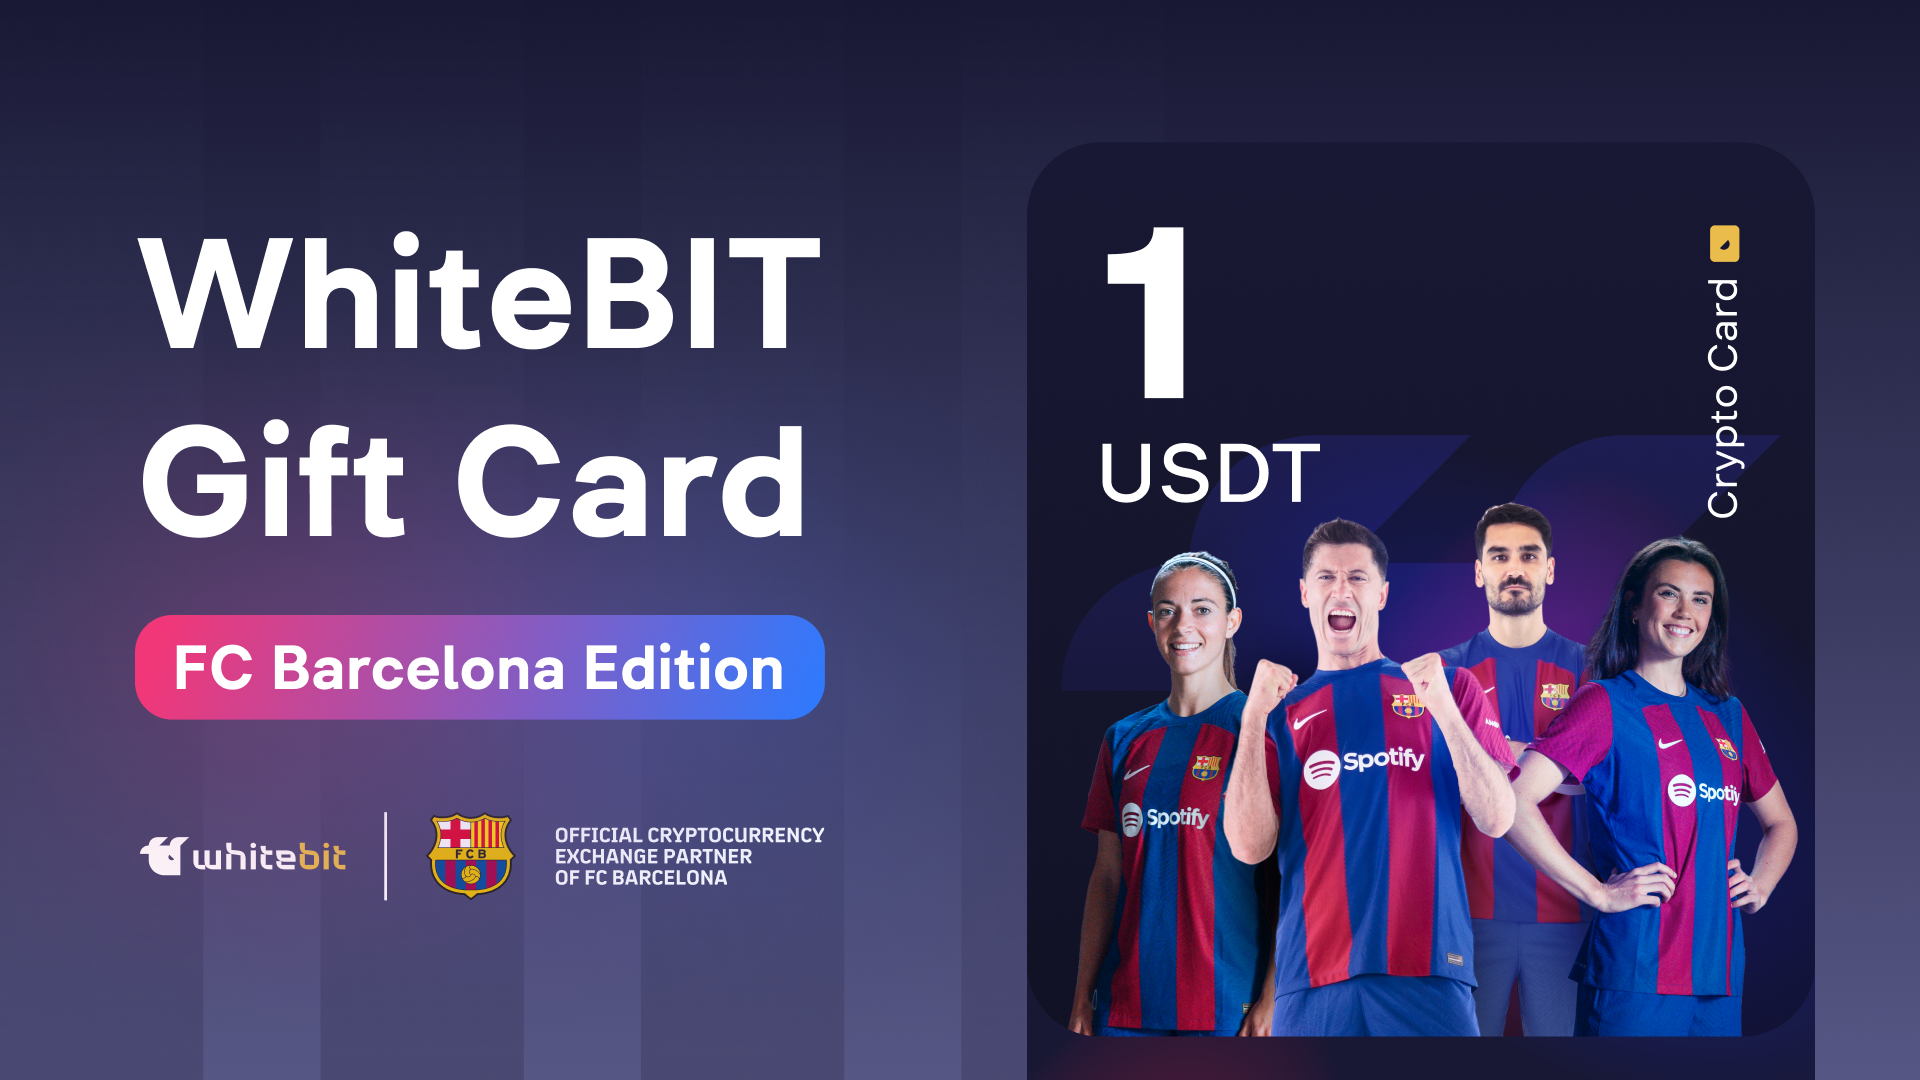 WhiteBIT - FC Barcelona Edition - 1 USDT Gift Card $1.39